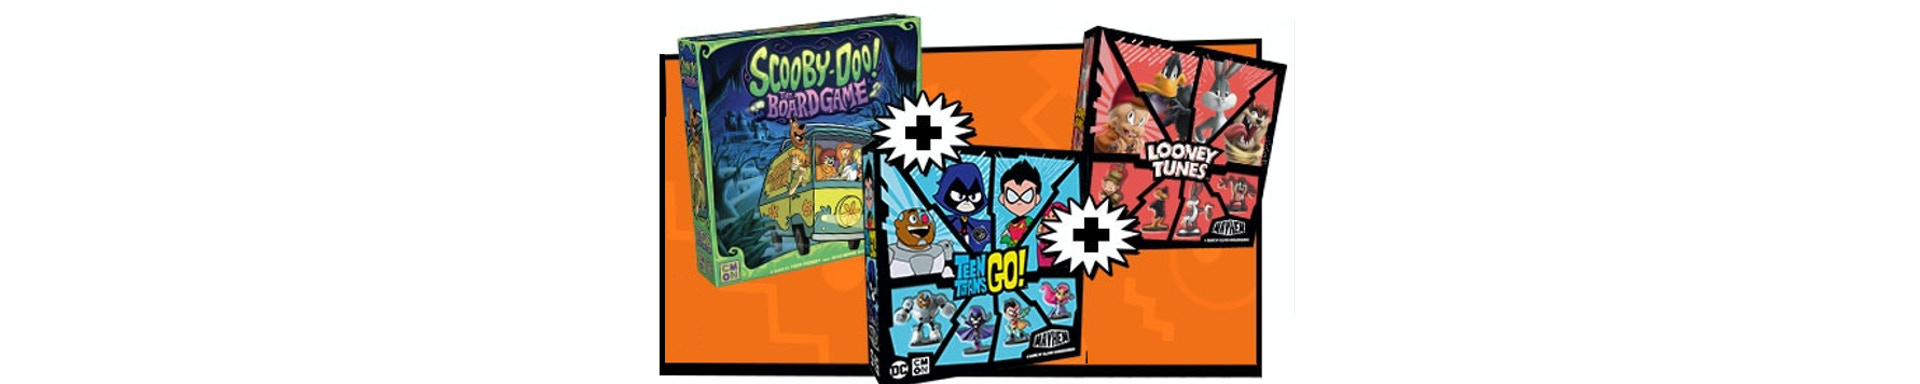 CMON Teen Titans Go! board game Scooby-Doo board game Looney Tunes board game slice